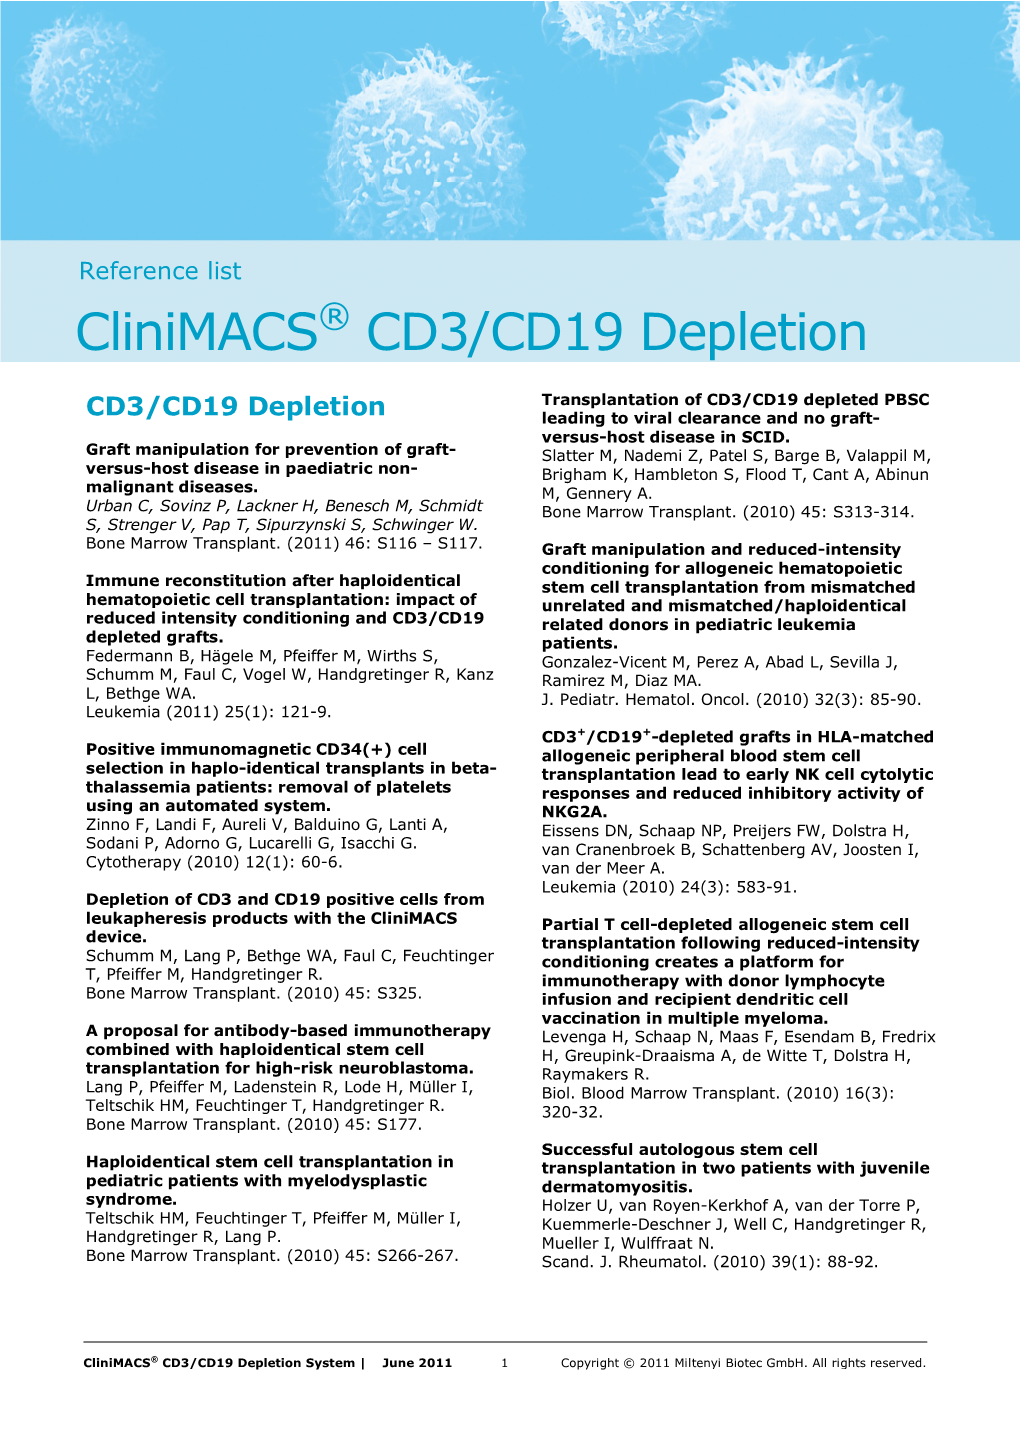 Clinimacs CD3/CD19 Depletion System